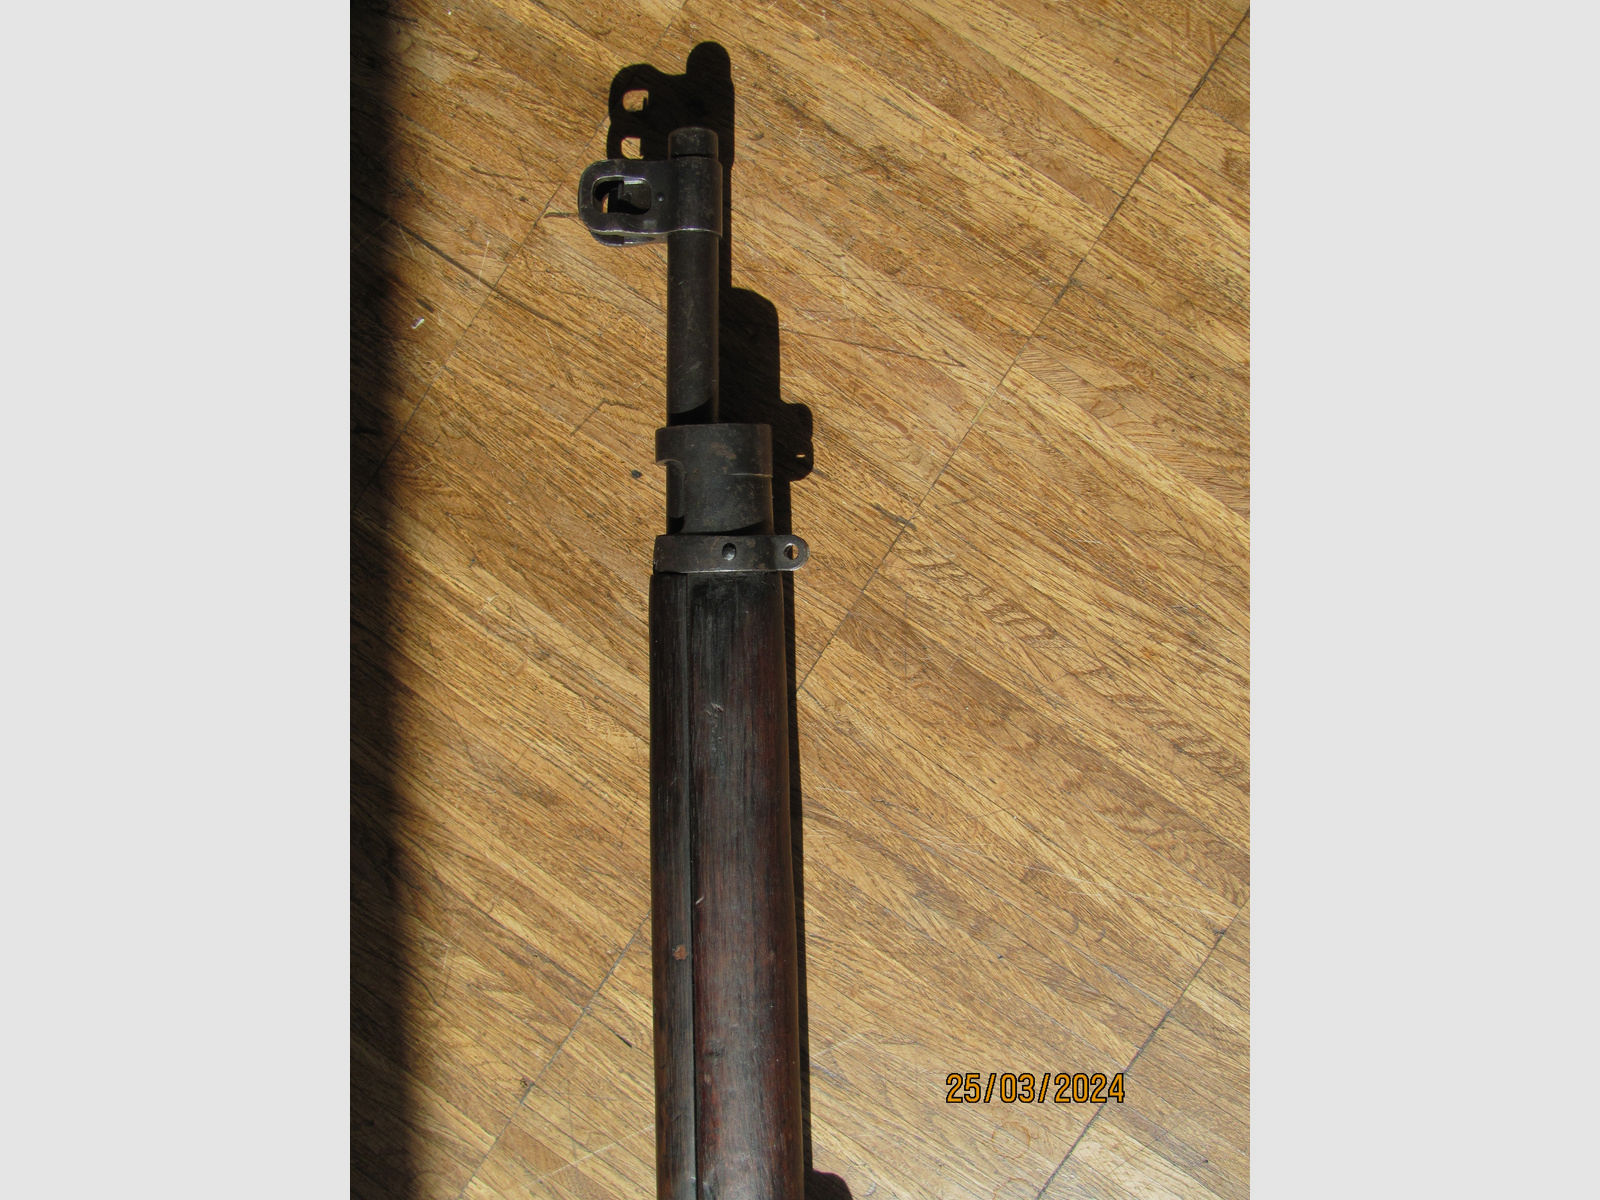 Seltene Enfield P14 Mark 1*  Remington .303 british -- gestempelt RE * ProdNr 9378x --  guter Gesamtzustand -- 875,- VHB